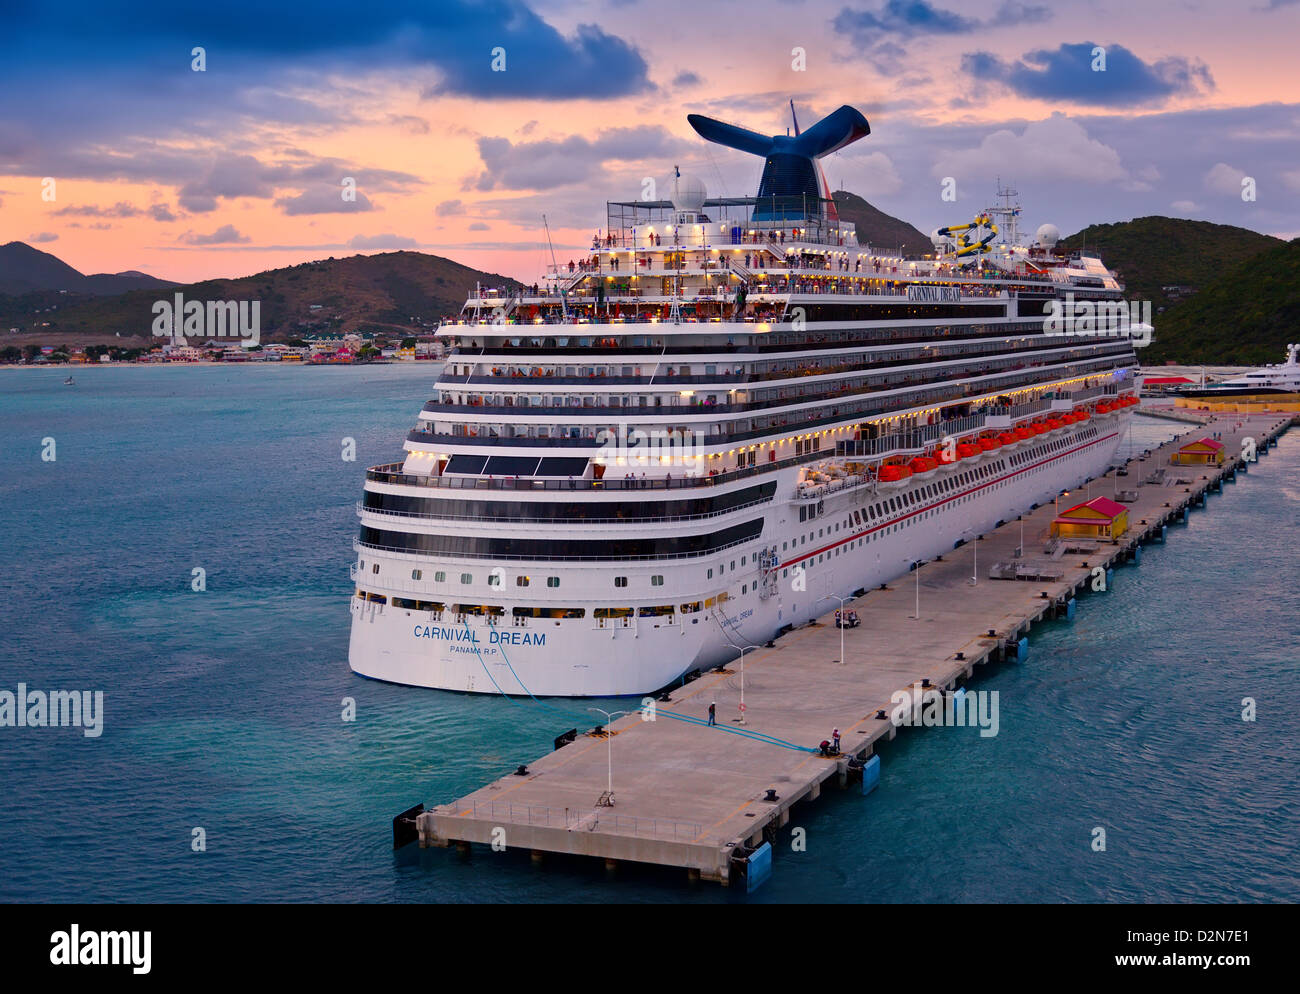 Cruise ship in St. Maarten at sunset Stock Photo